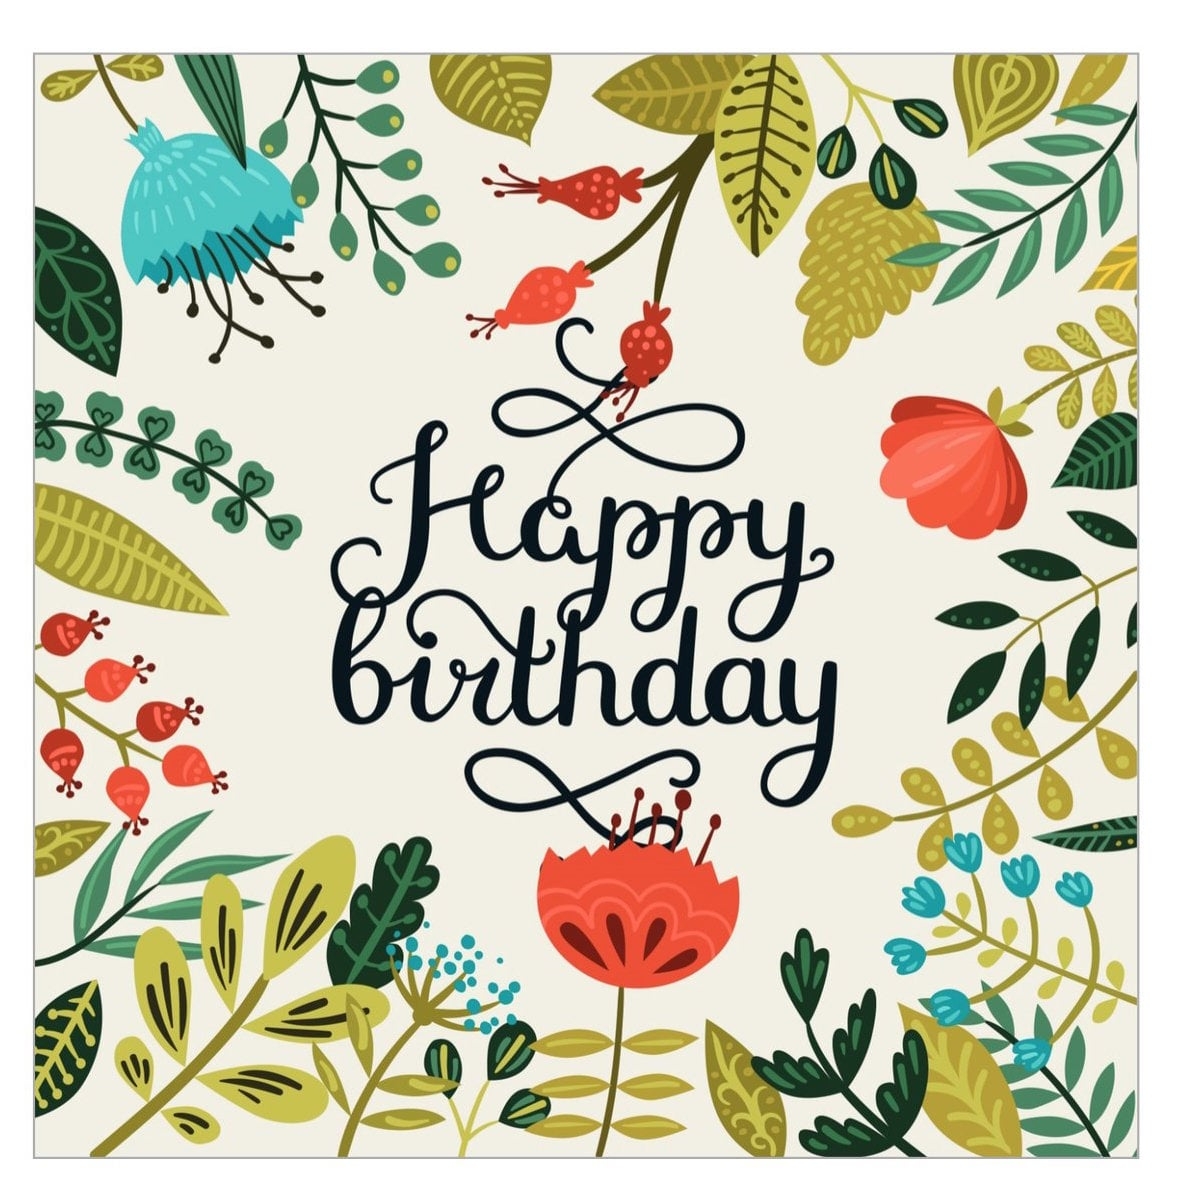 Free Printable Cards For Birthdays POPSUGAR Smart Living - Free Printable Birthday Cards For Her